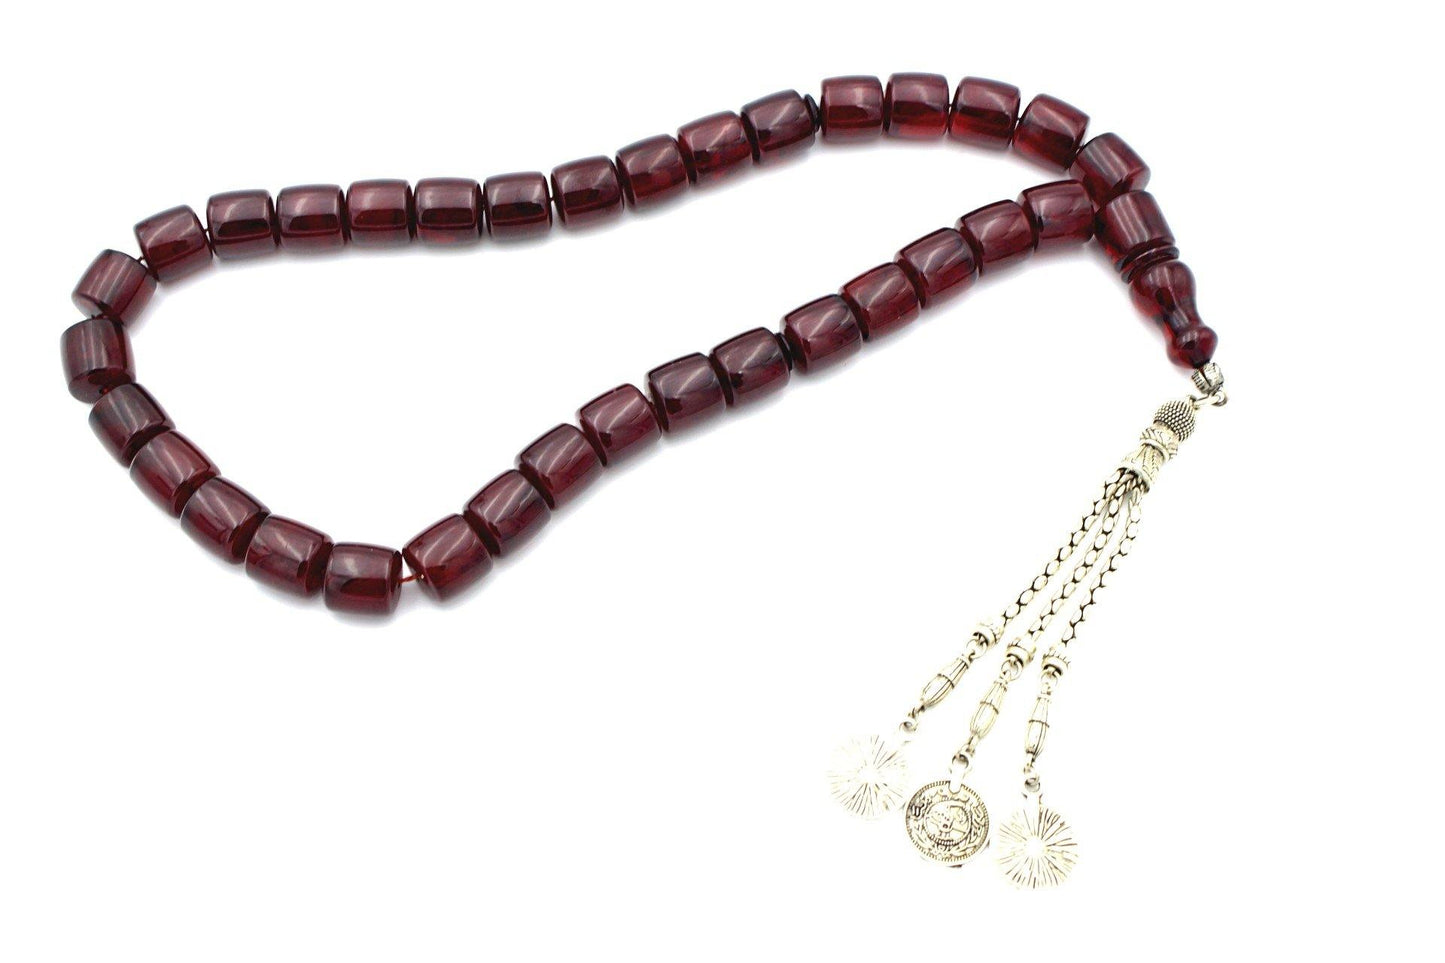 gemstone jewellery uk prayer beads tasbih bakelite 